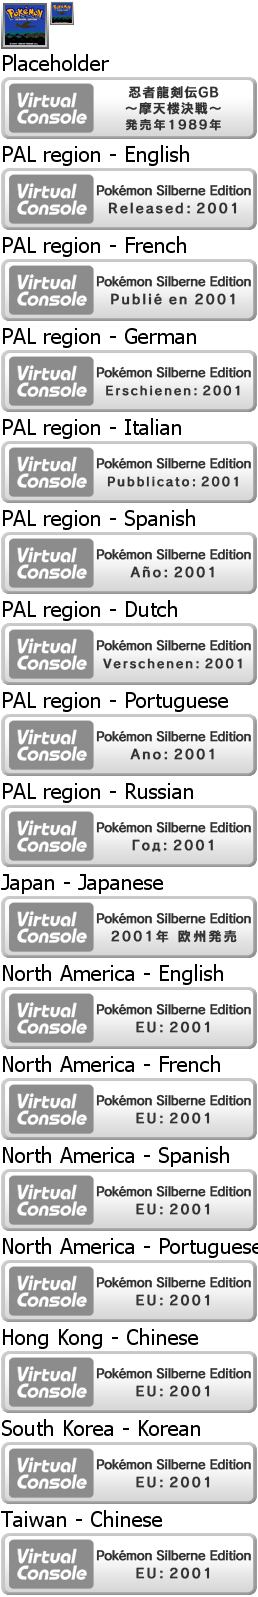 Virtual Console - Pokémon Silberne Edition